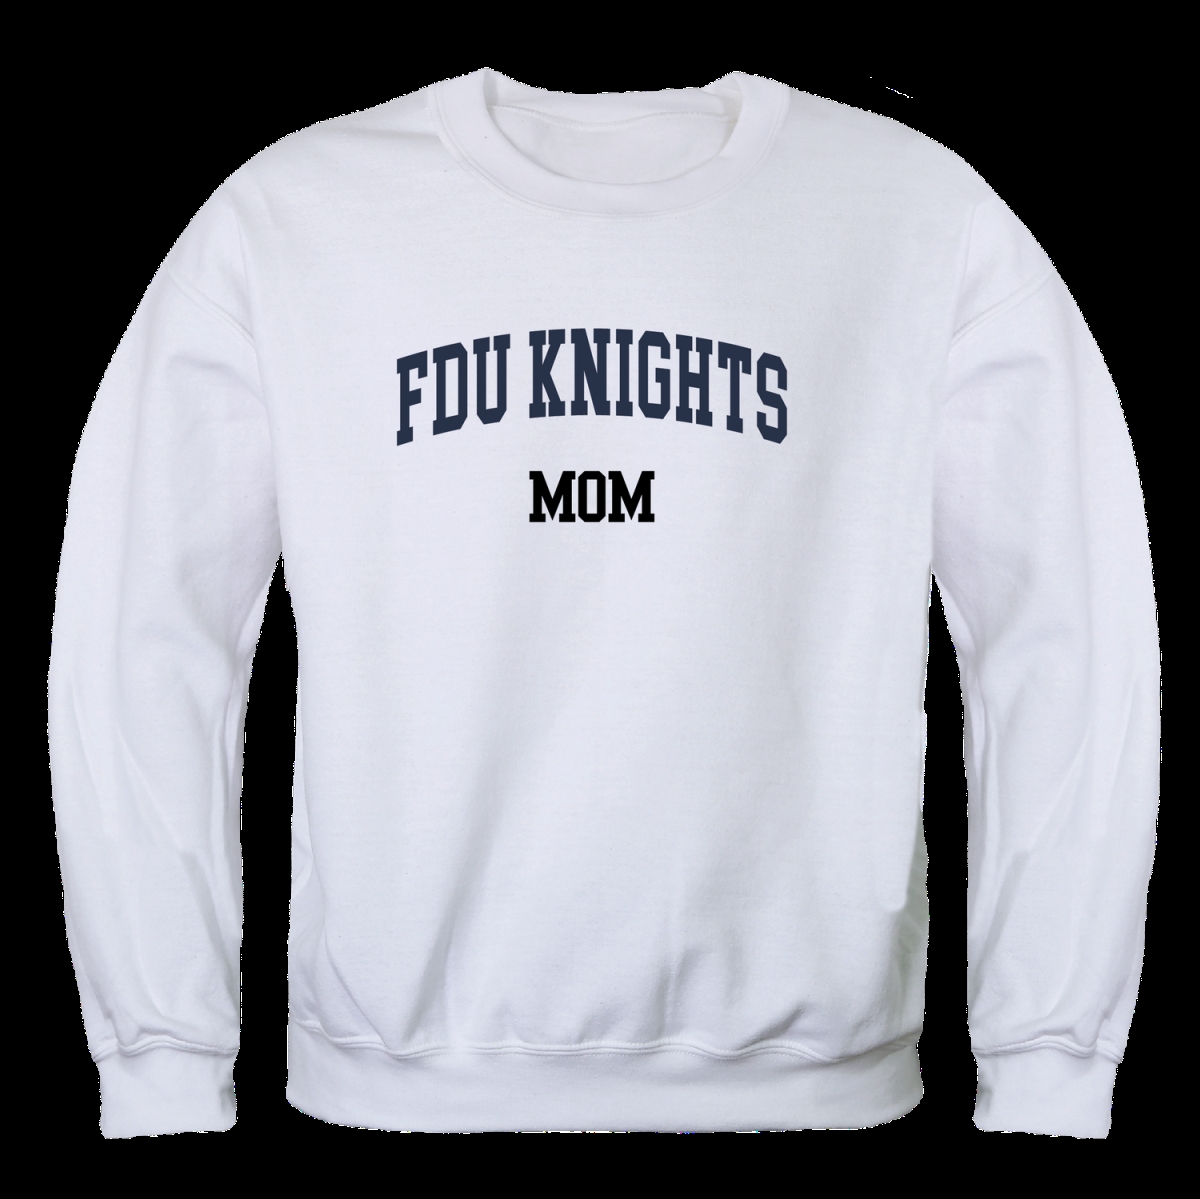 W Republic 564-300-WT3-01 Fairleigh Dickinson Knights Mom Crewneck T-Shirt&#44; White - Small